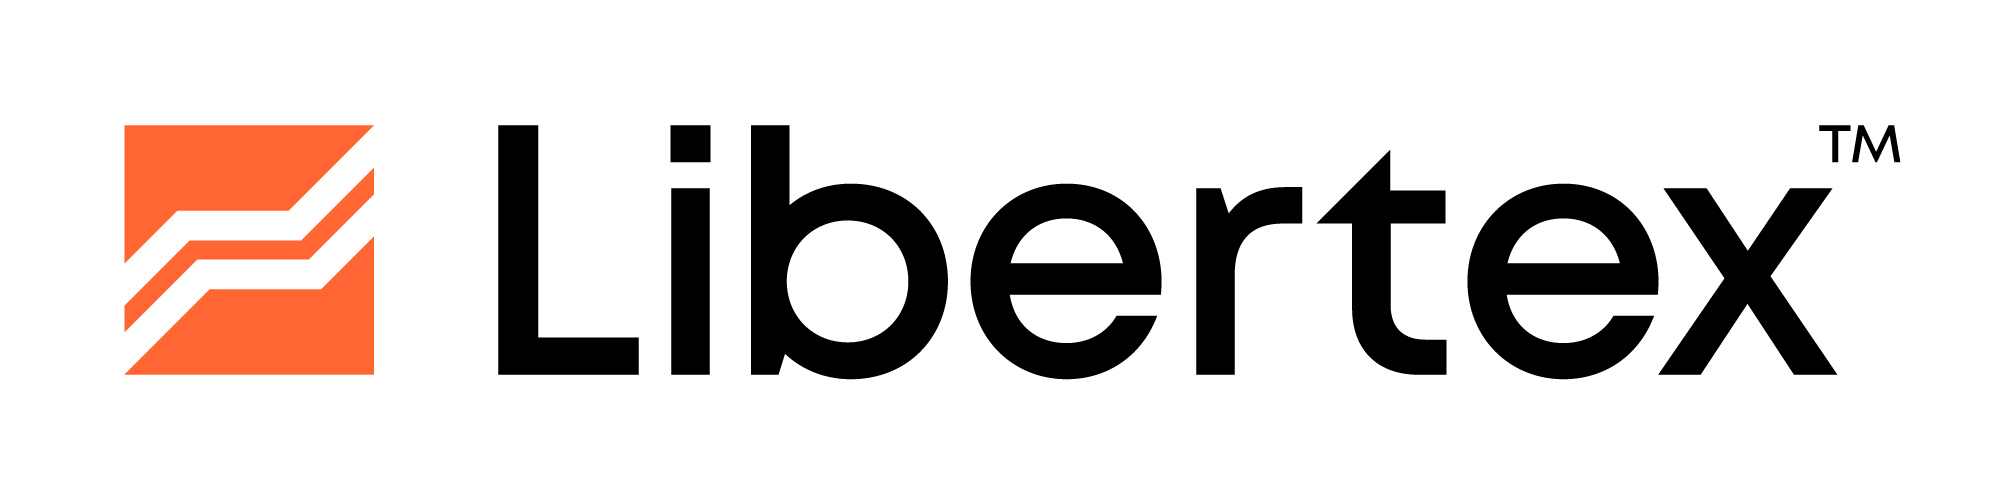 Libertex Broker Logo